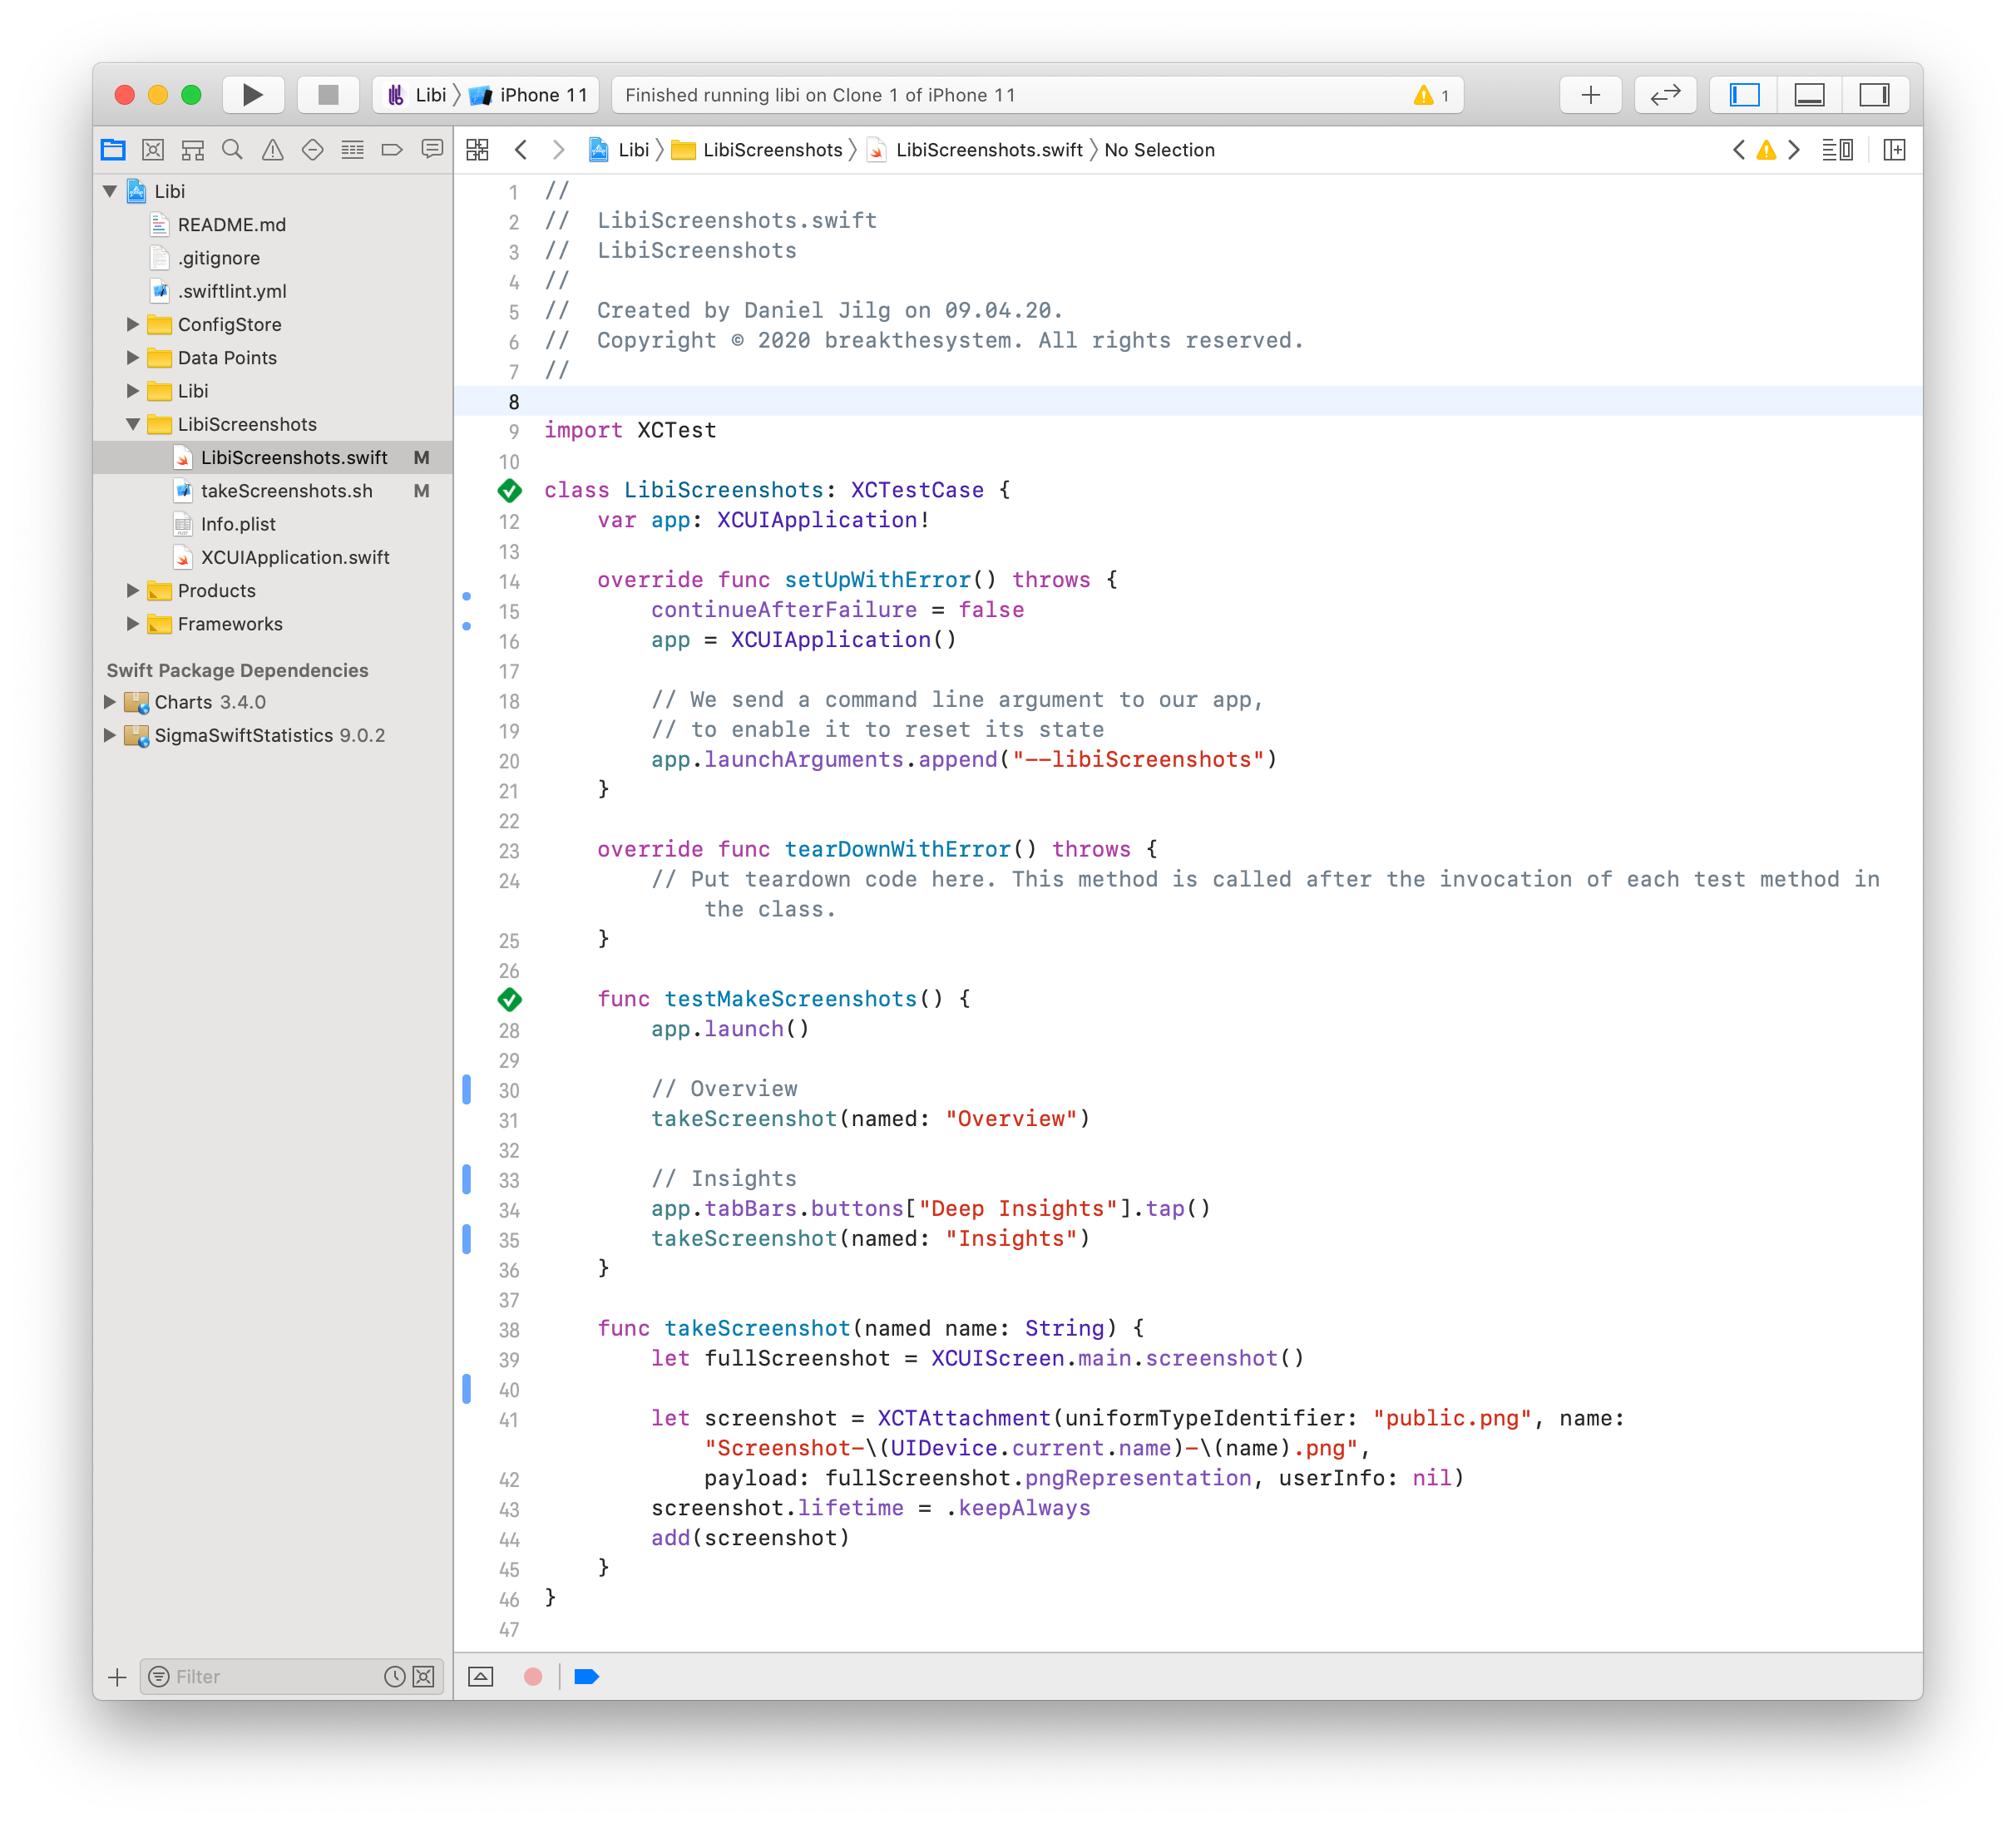 An Xcode screenshot displaying the finished written test